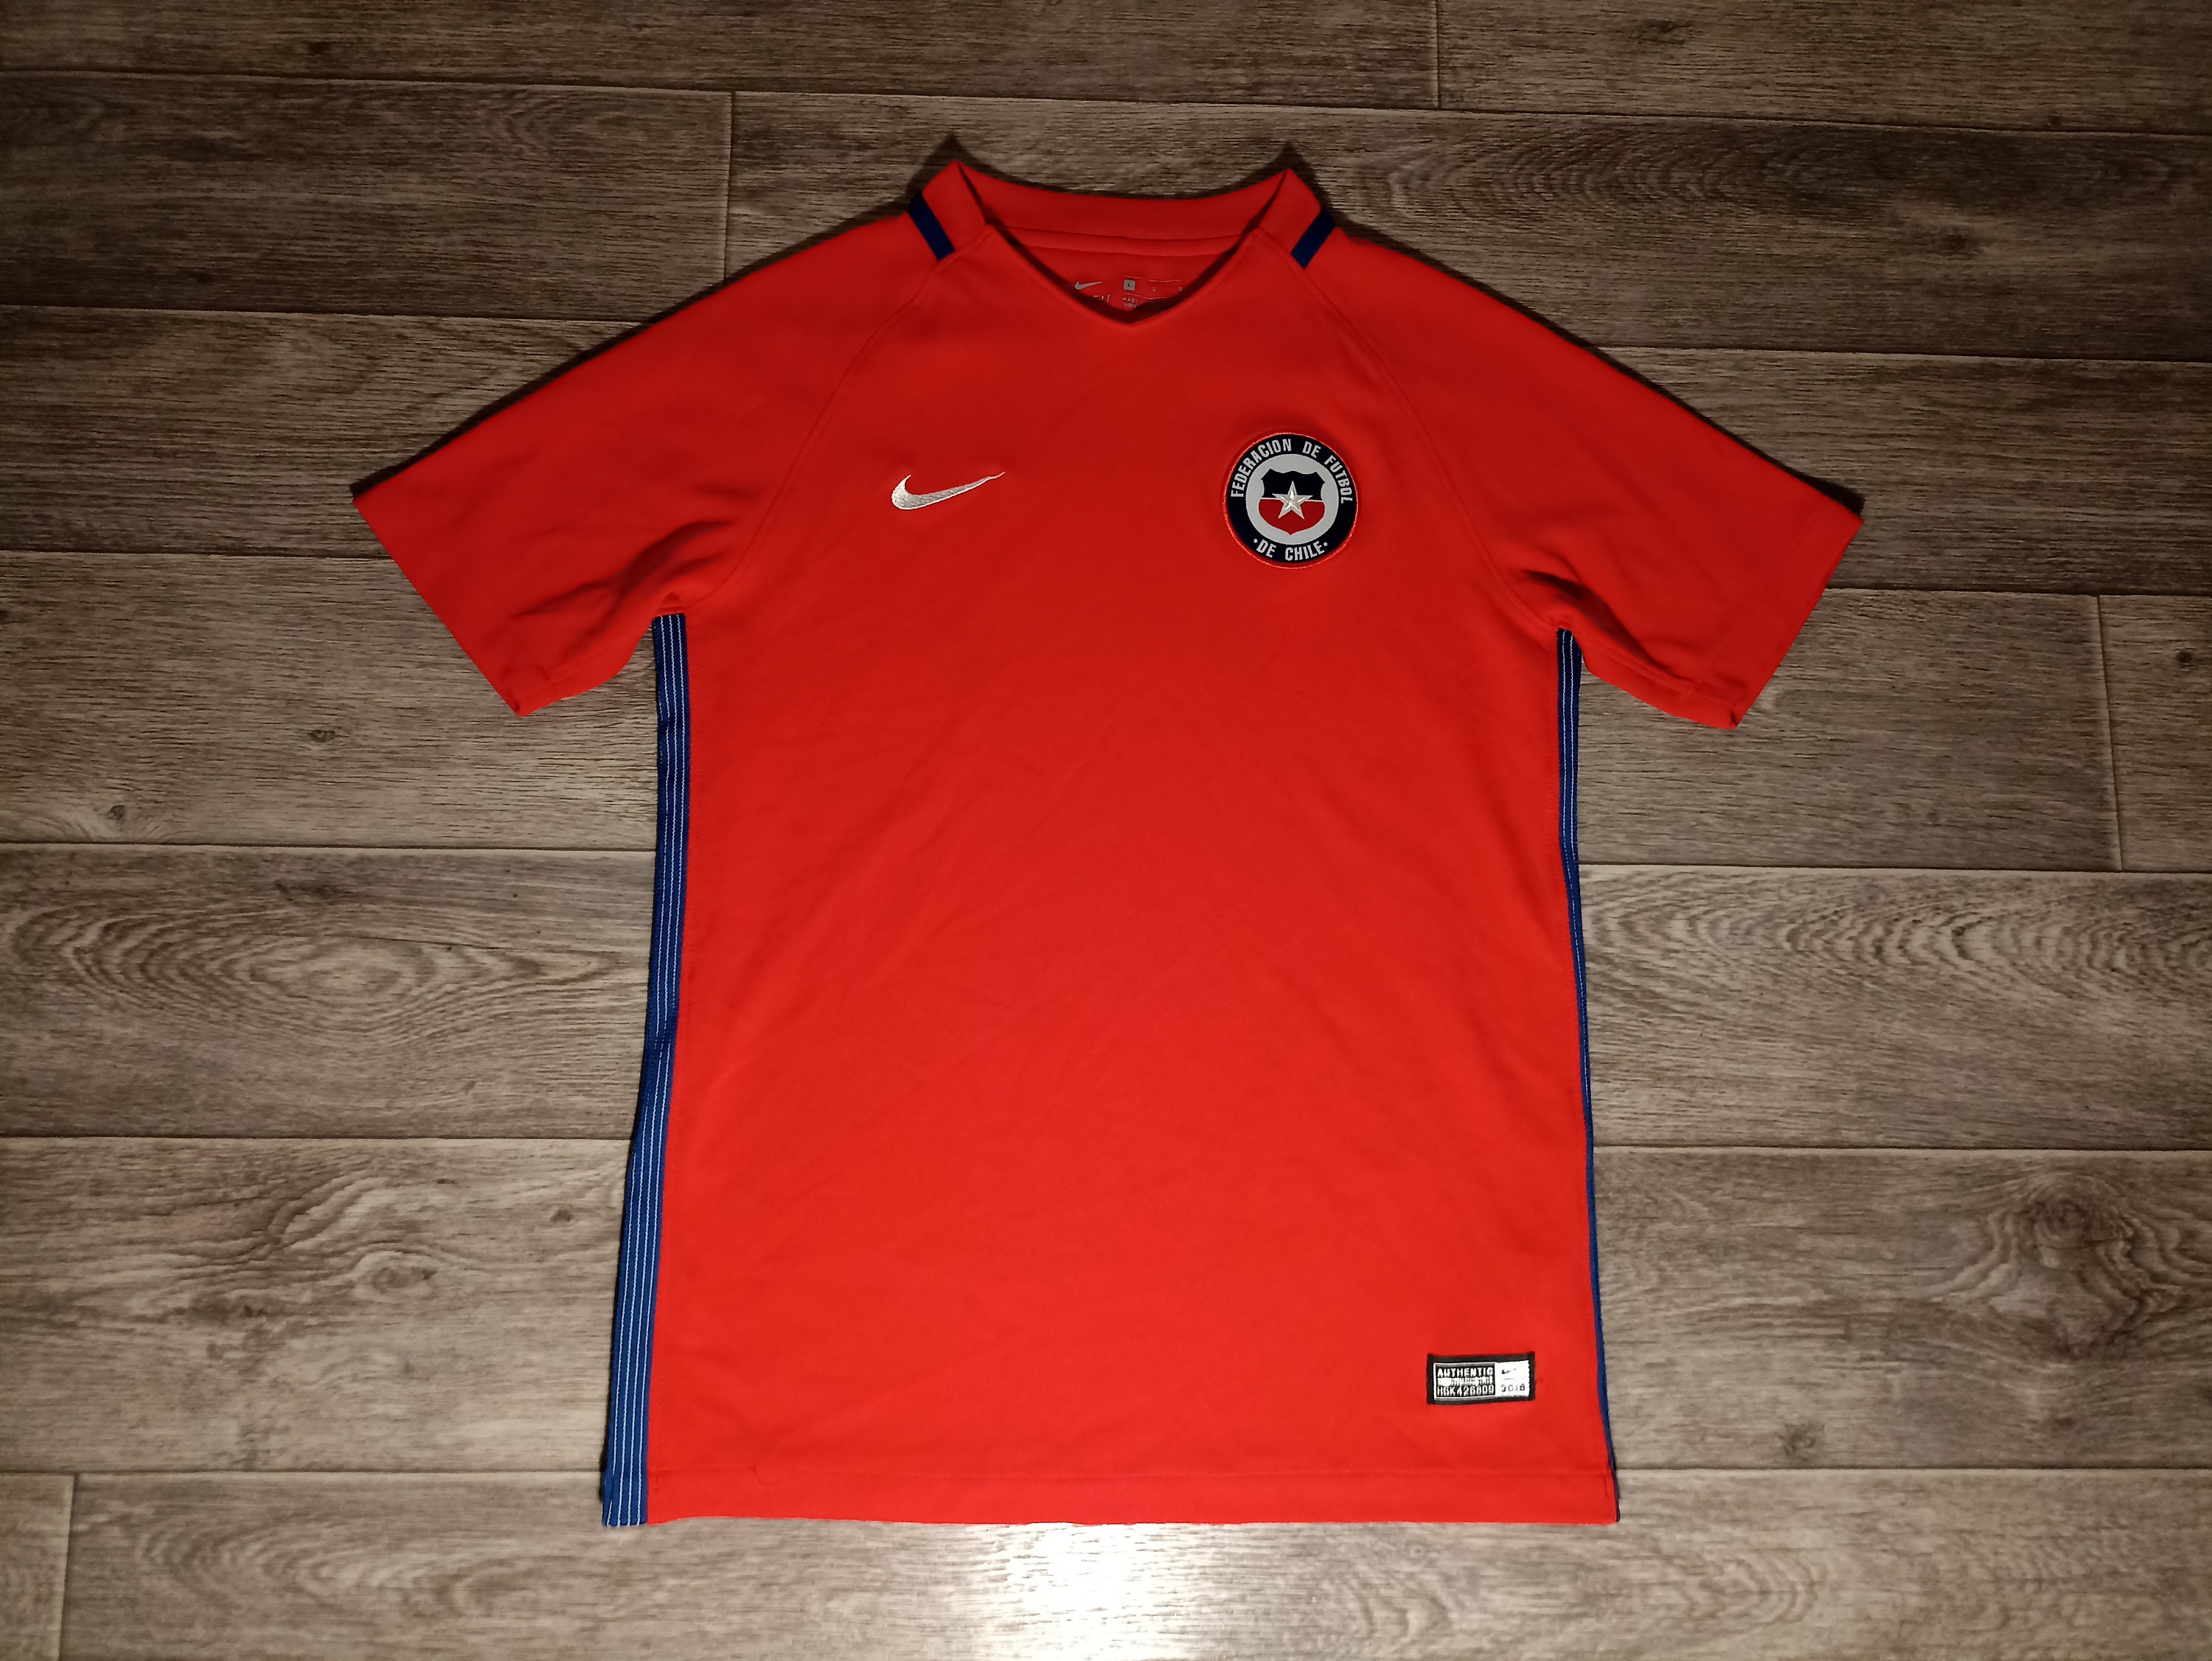 Chile National Football Team Nike 2016/17 Red Boy's Soccer Sports Training  Uniform Shirt Jersey Knitwear Size Teenage Youth L 12-13 Yrs 